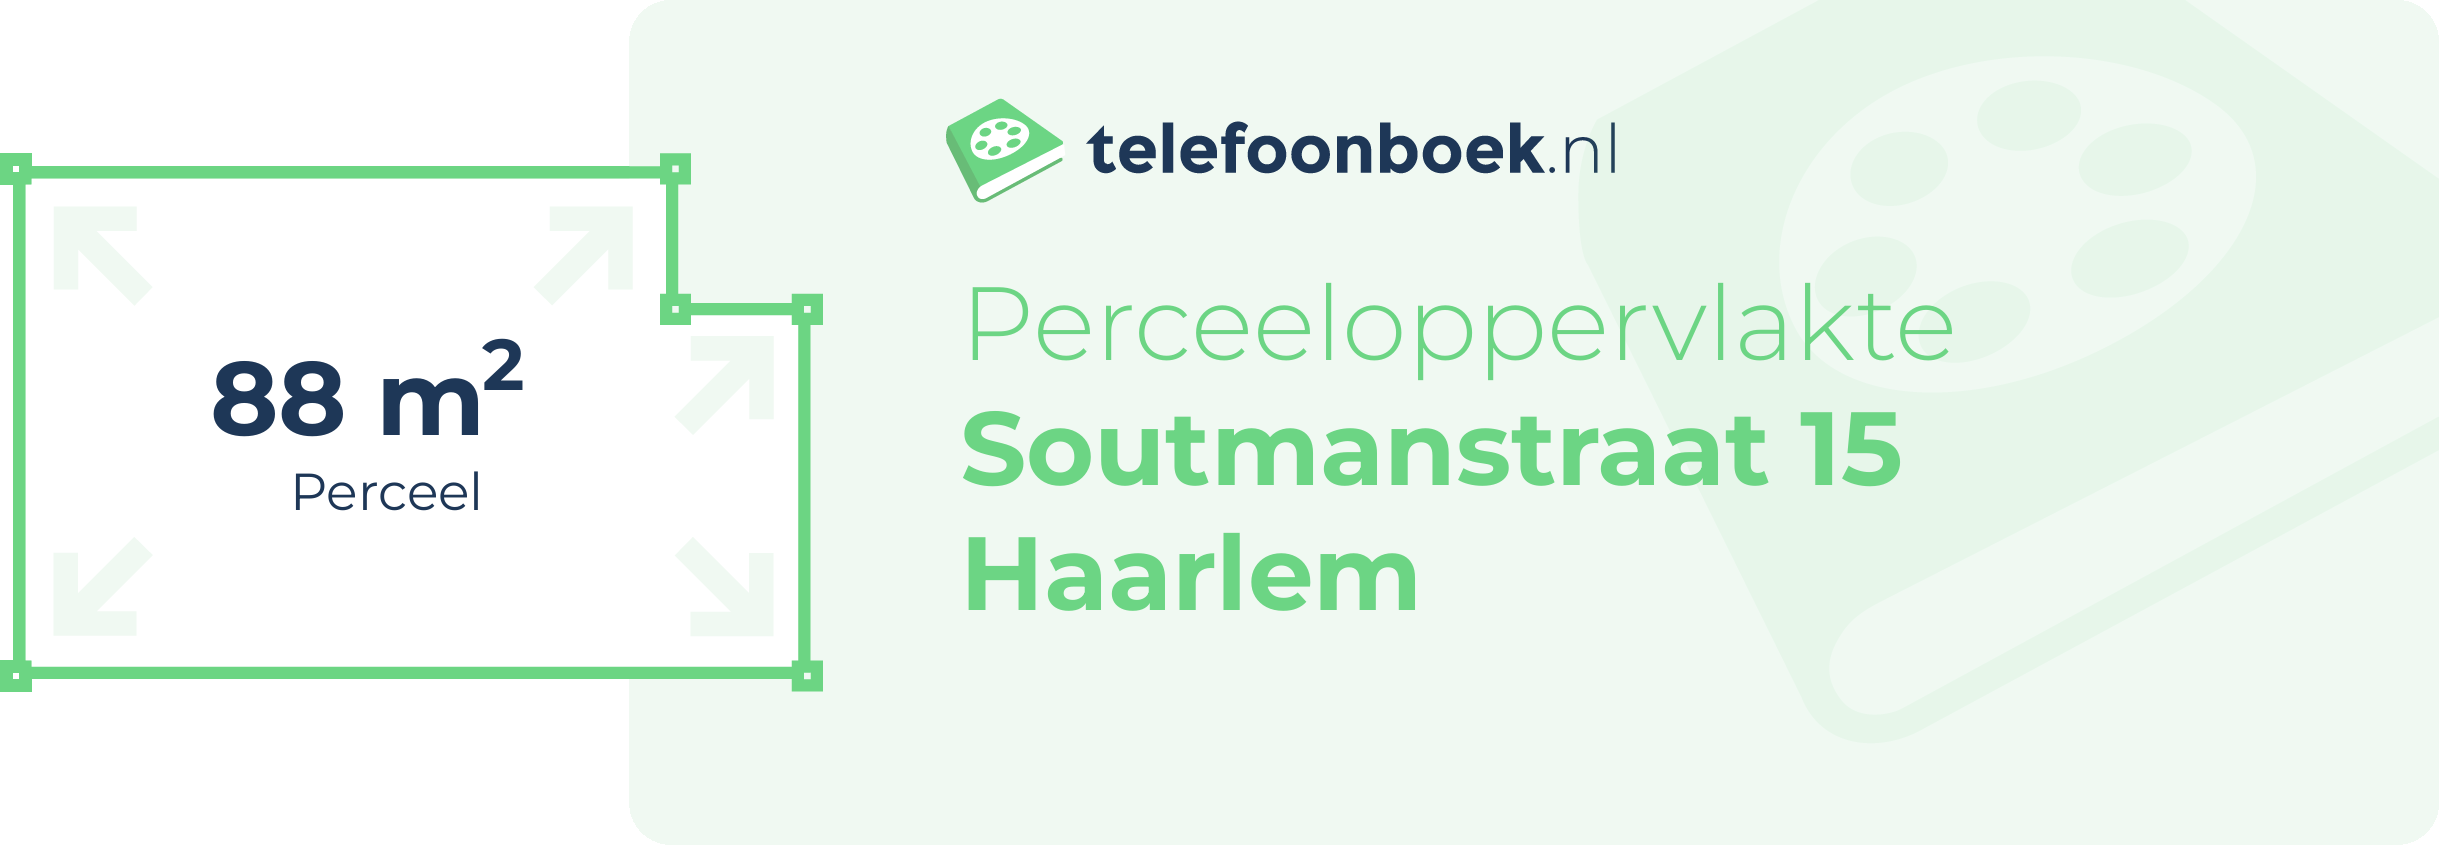 Perceeloppervlakte Soutmanstraat 15 Haarlem